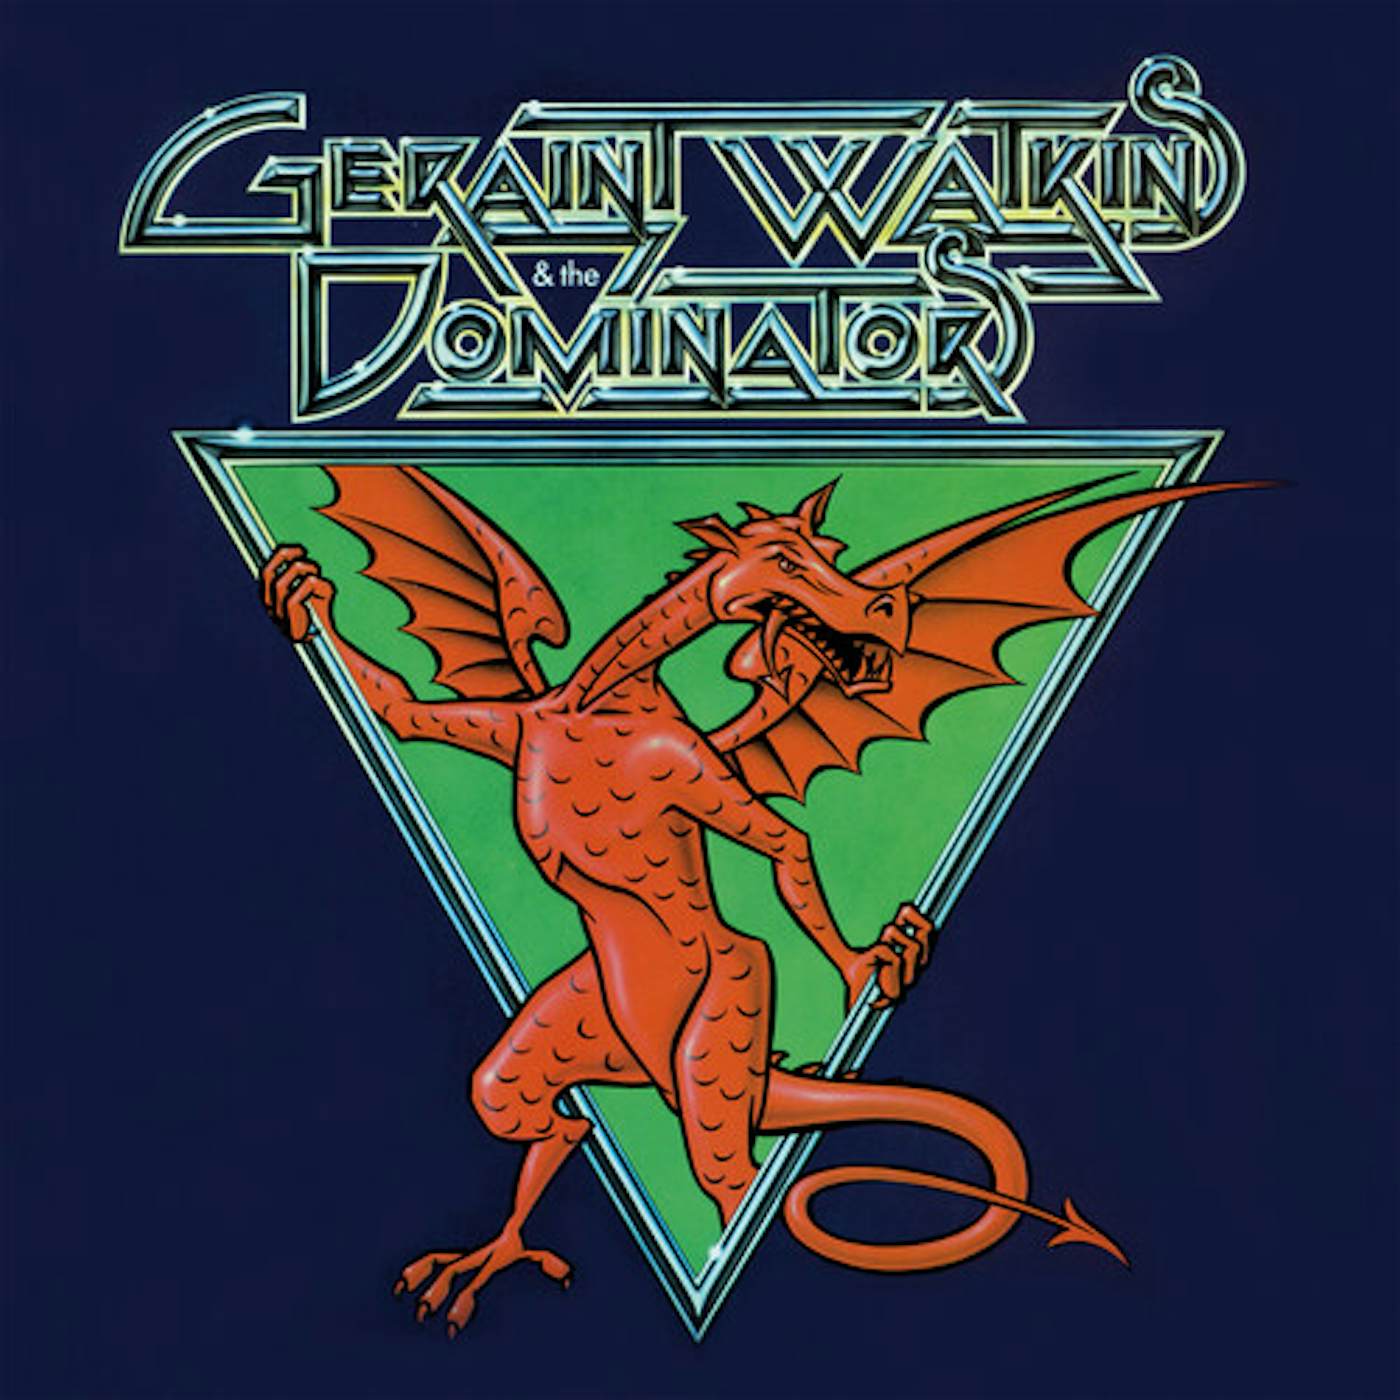 Geraint Watkins & The Dominators Vinyl Record